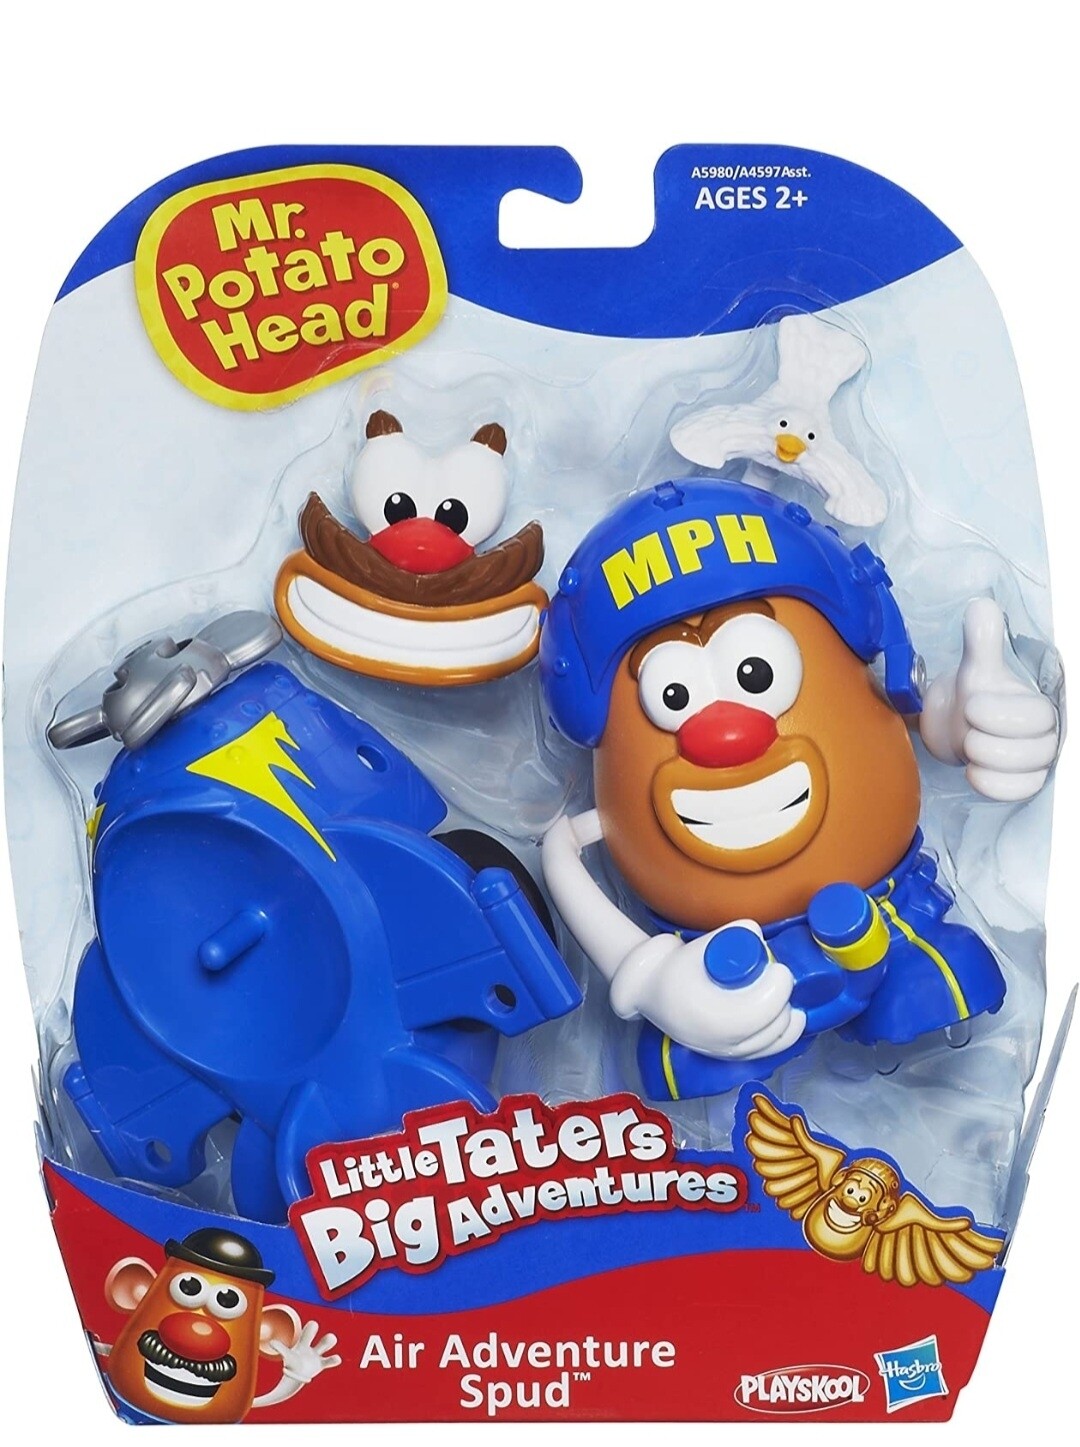 Mr. Potato Head, Little Taters Big Adventures